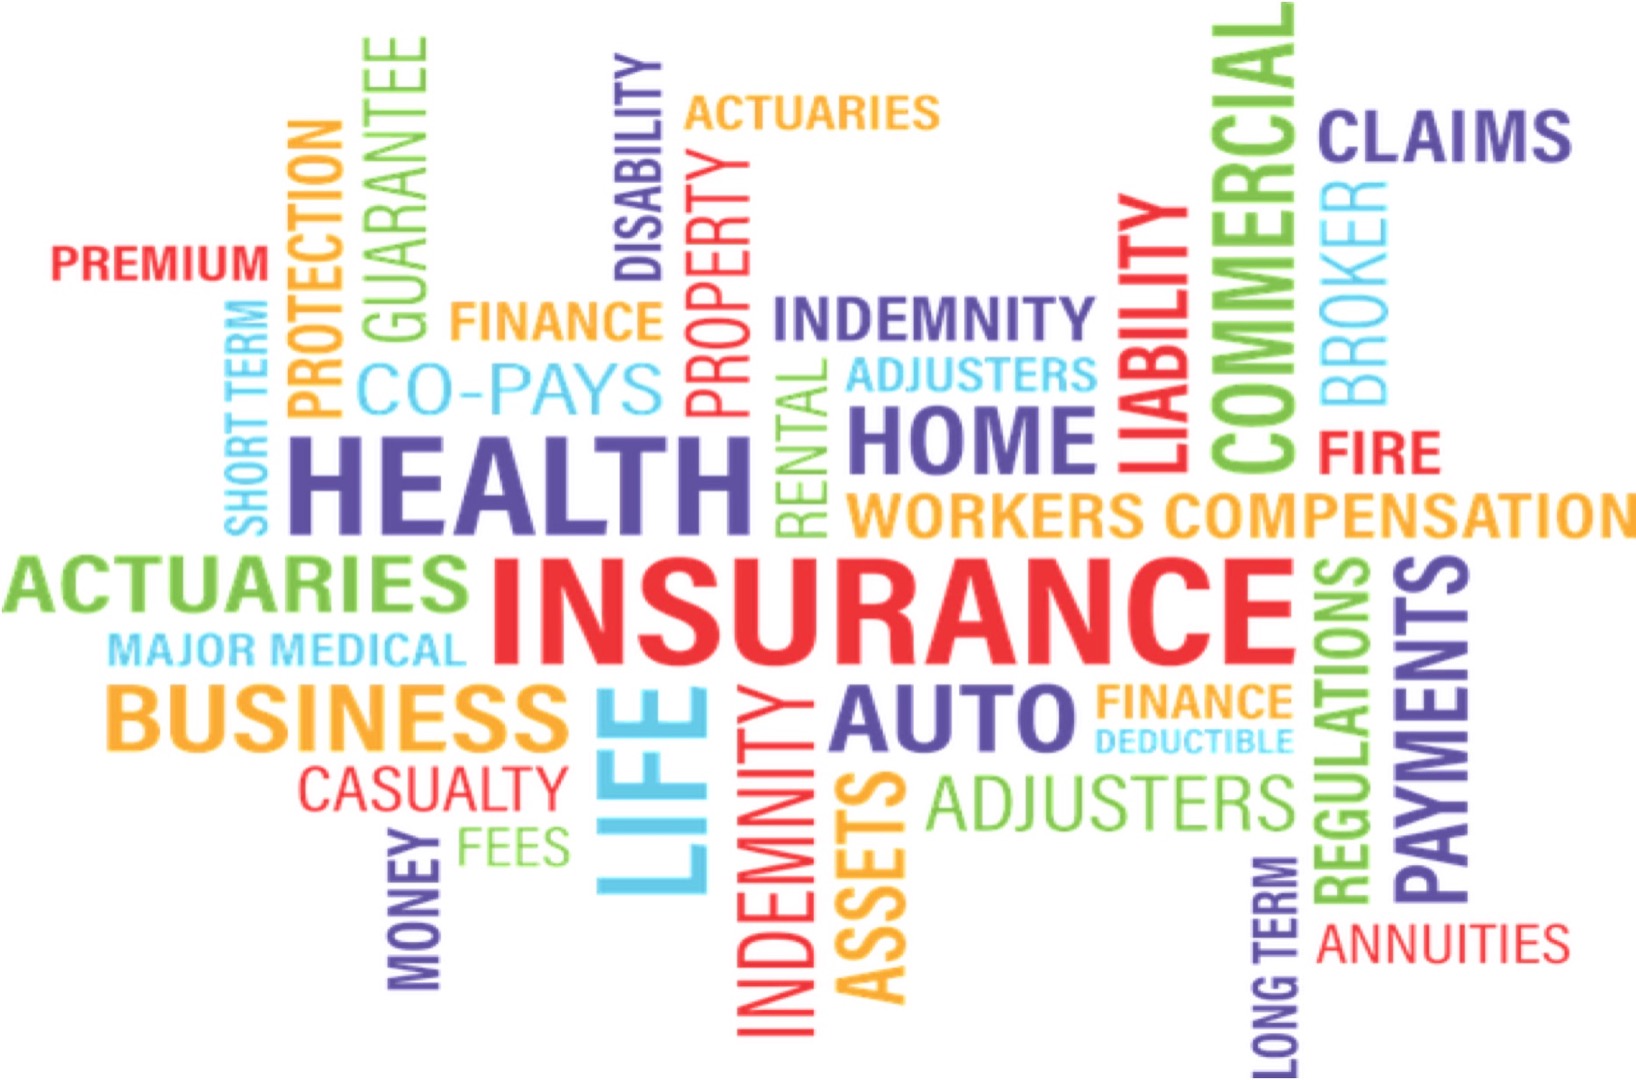 AAOIFI Shari'ah Standards # 26 & 41: Islamic Insurance & Reinsurance